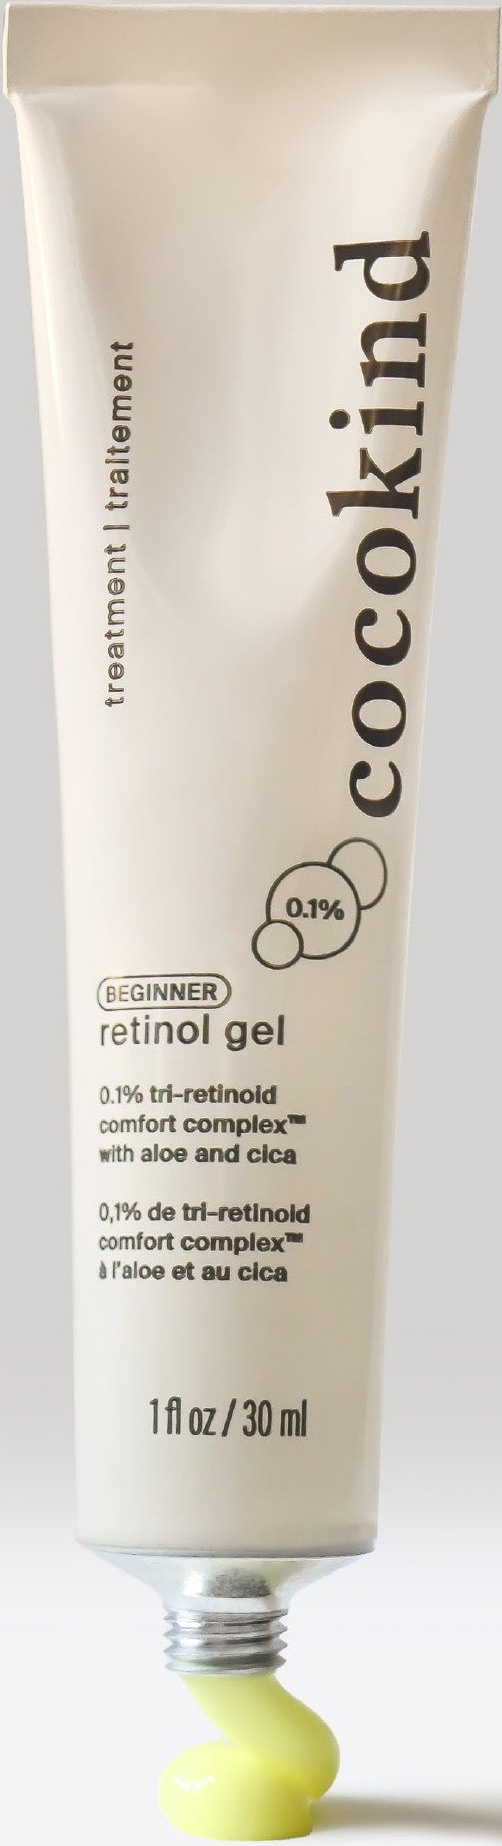 Cocokind Beginner Retinol Gel 0.1%